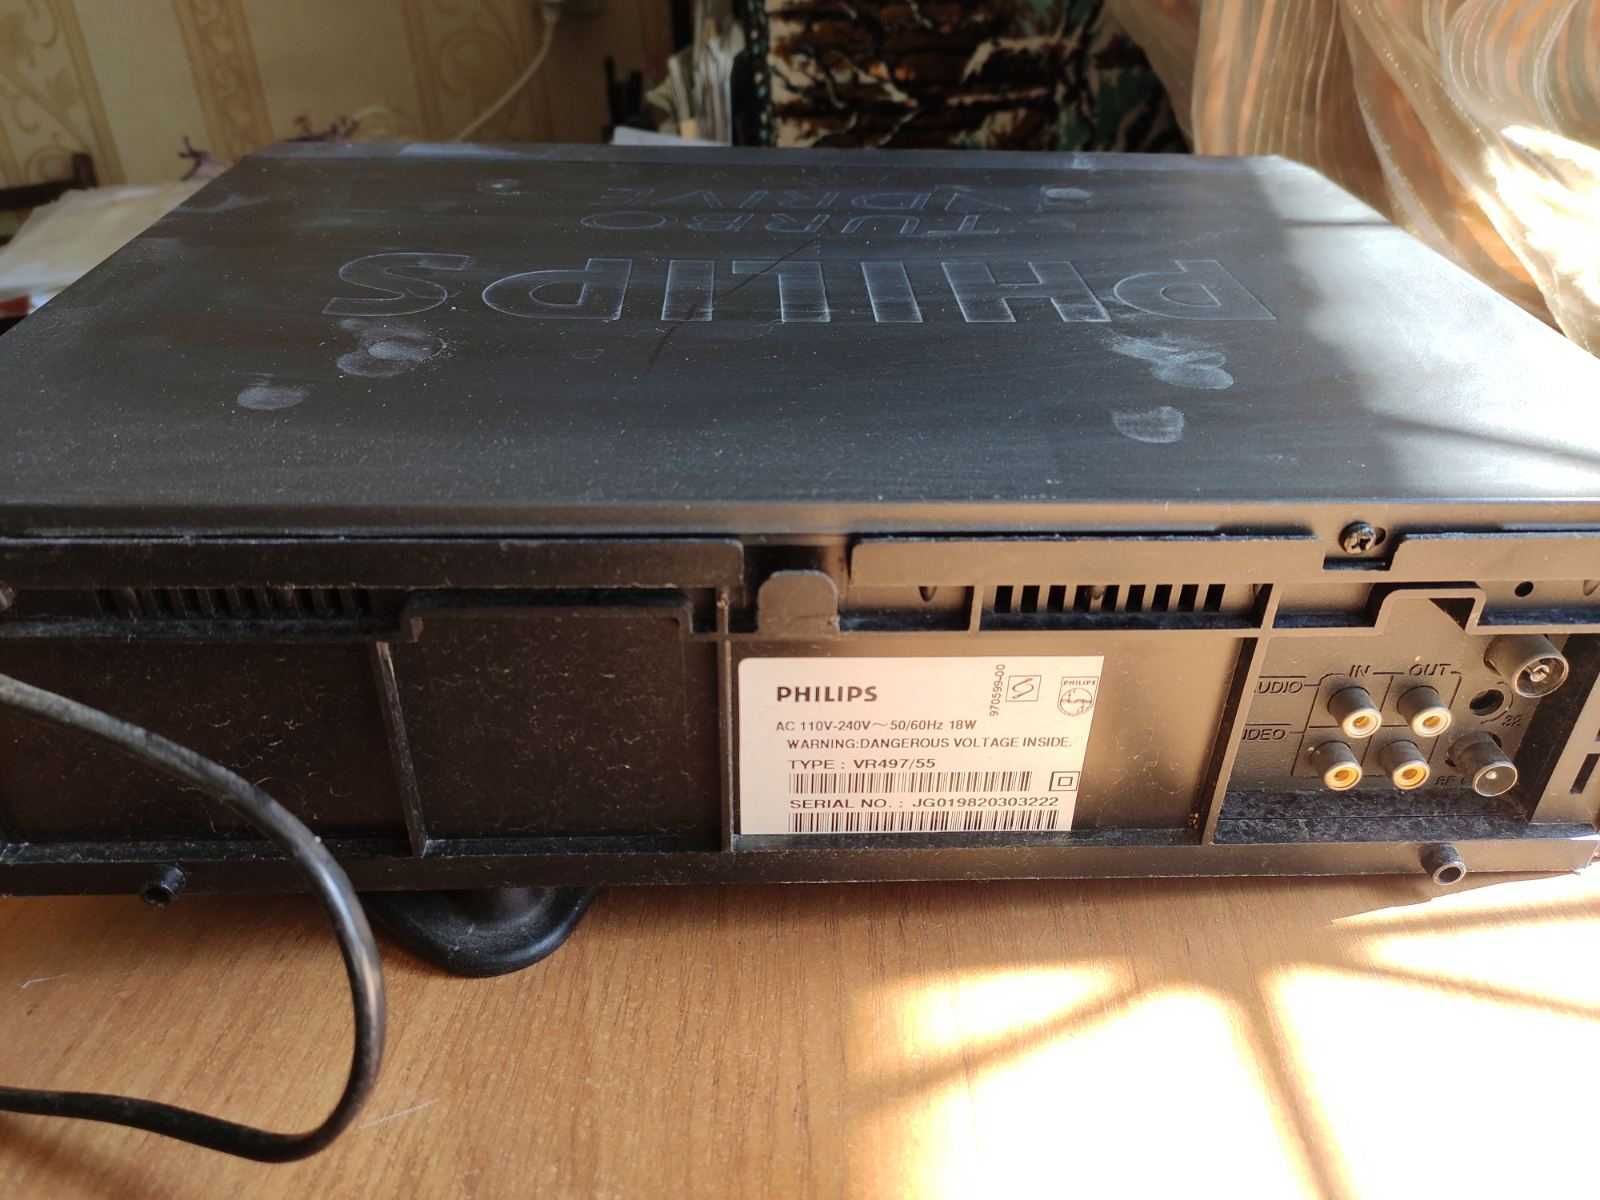 Відеомагнитофон кассетний Philips Turbo Drive VR497